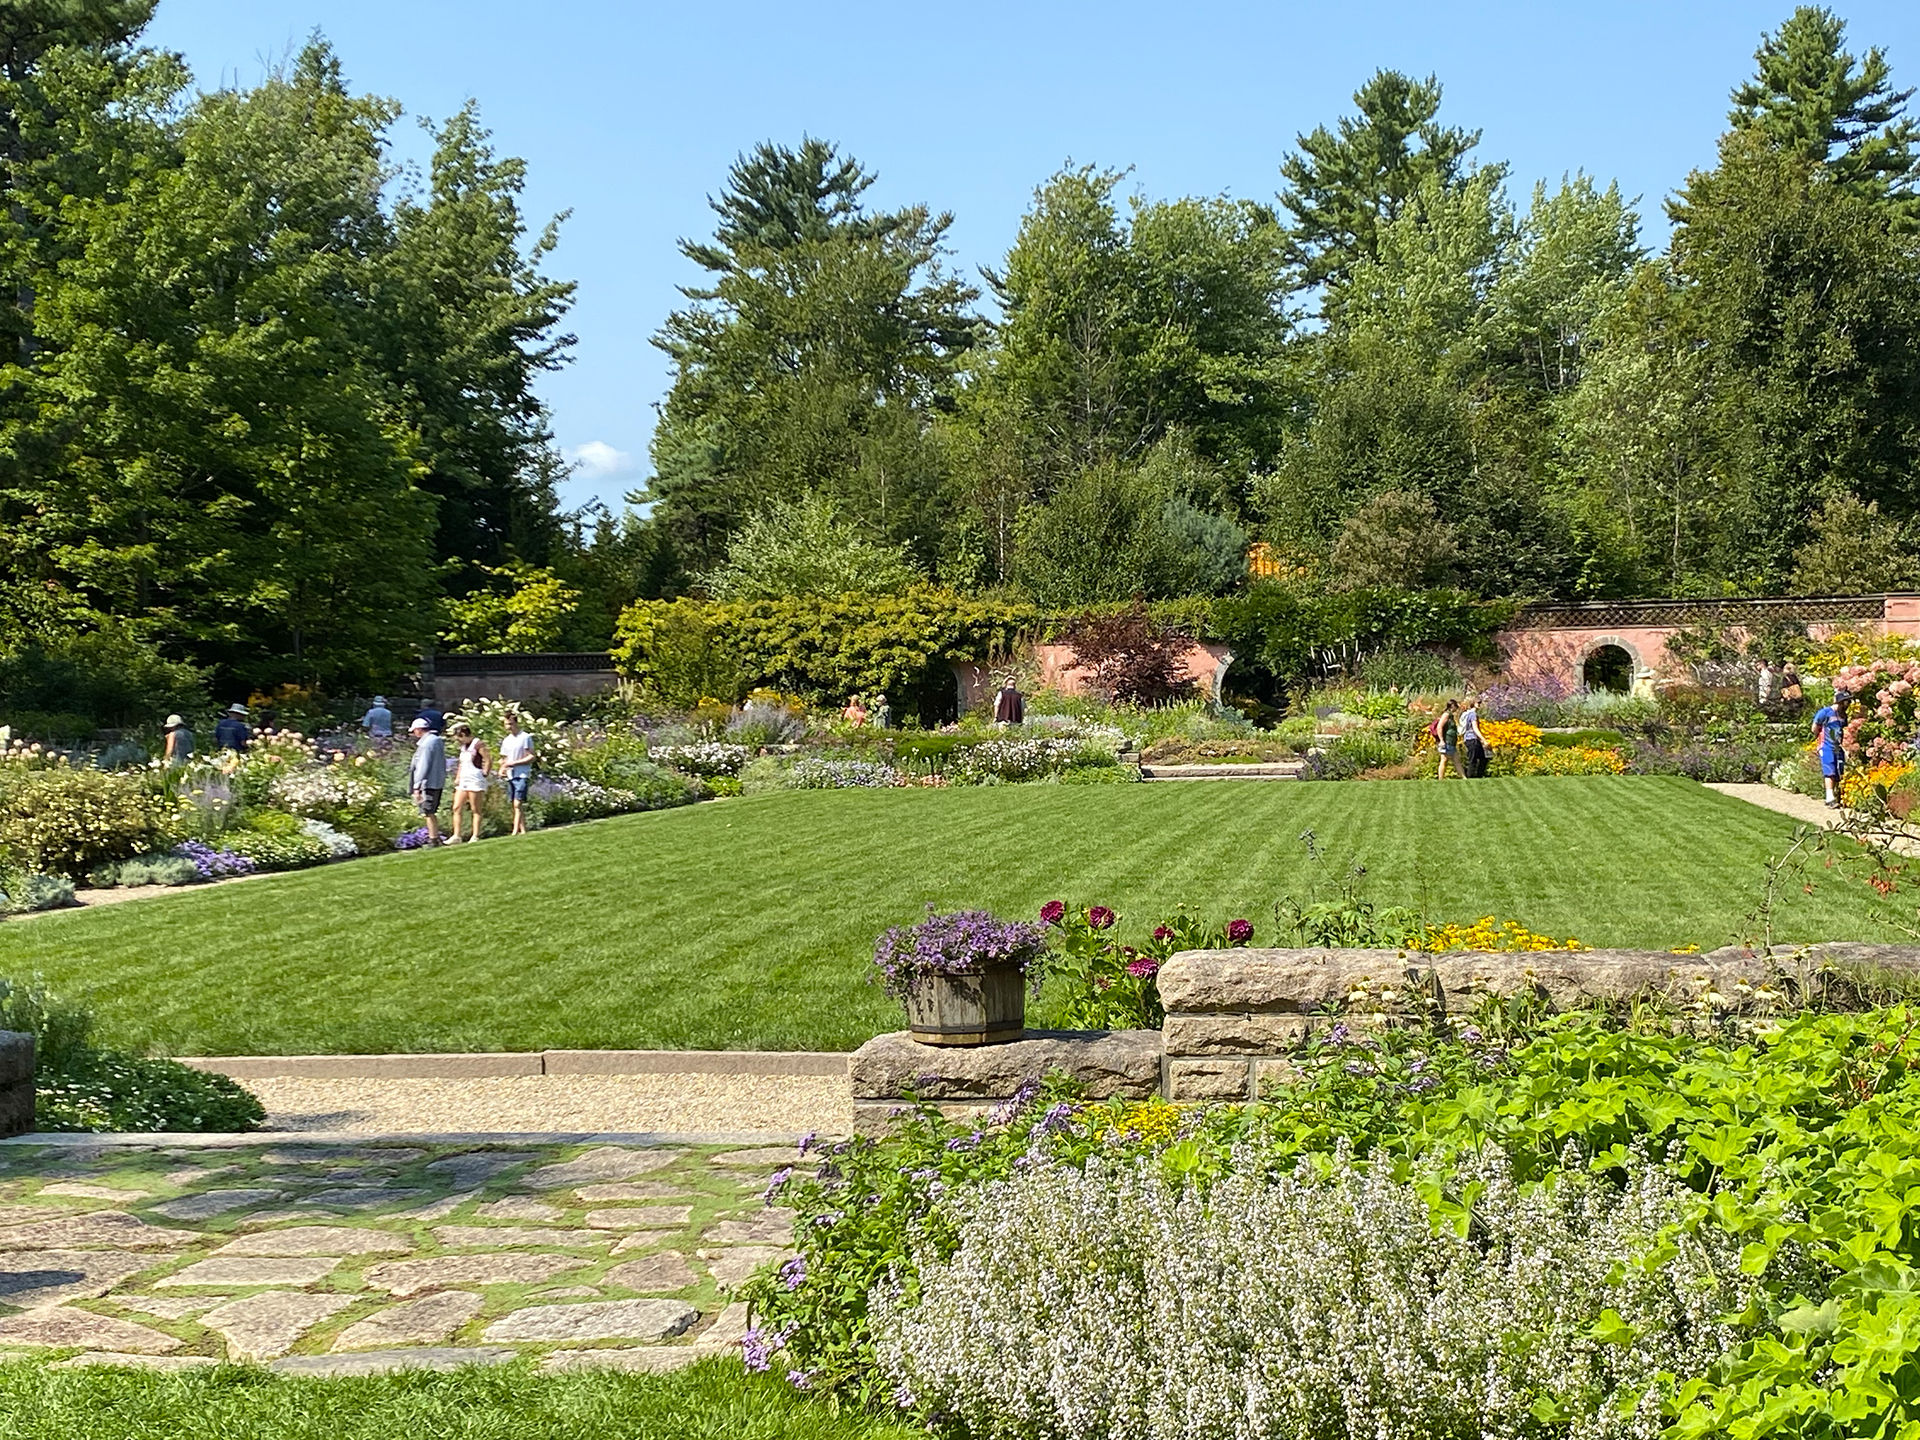 The Abby Aldrich Rockefeller Garden